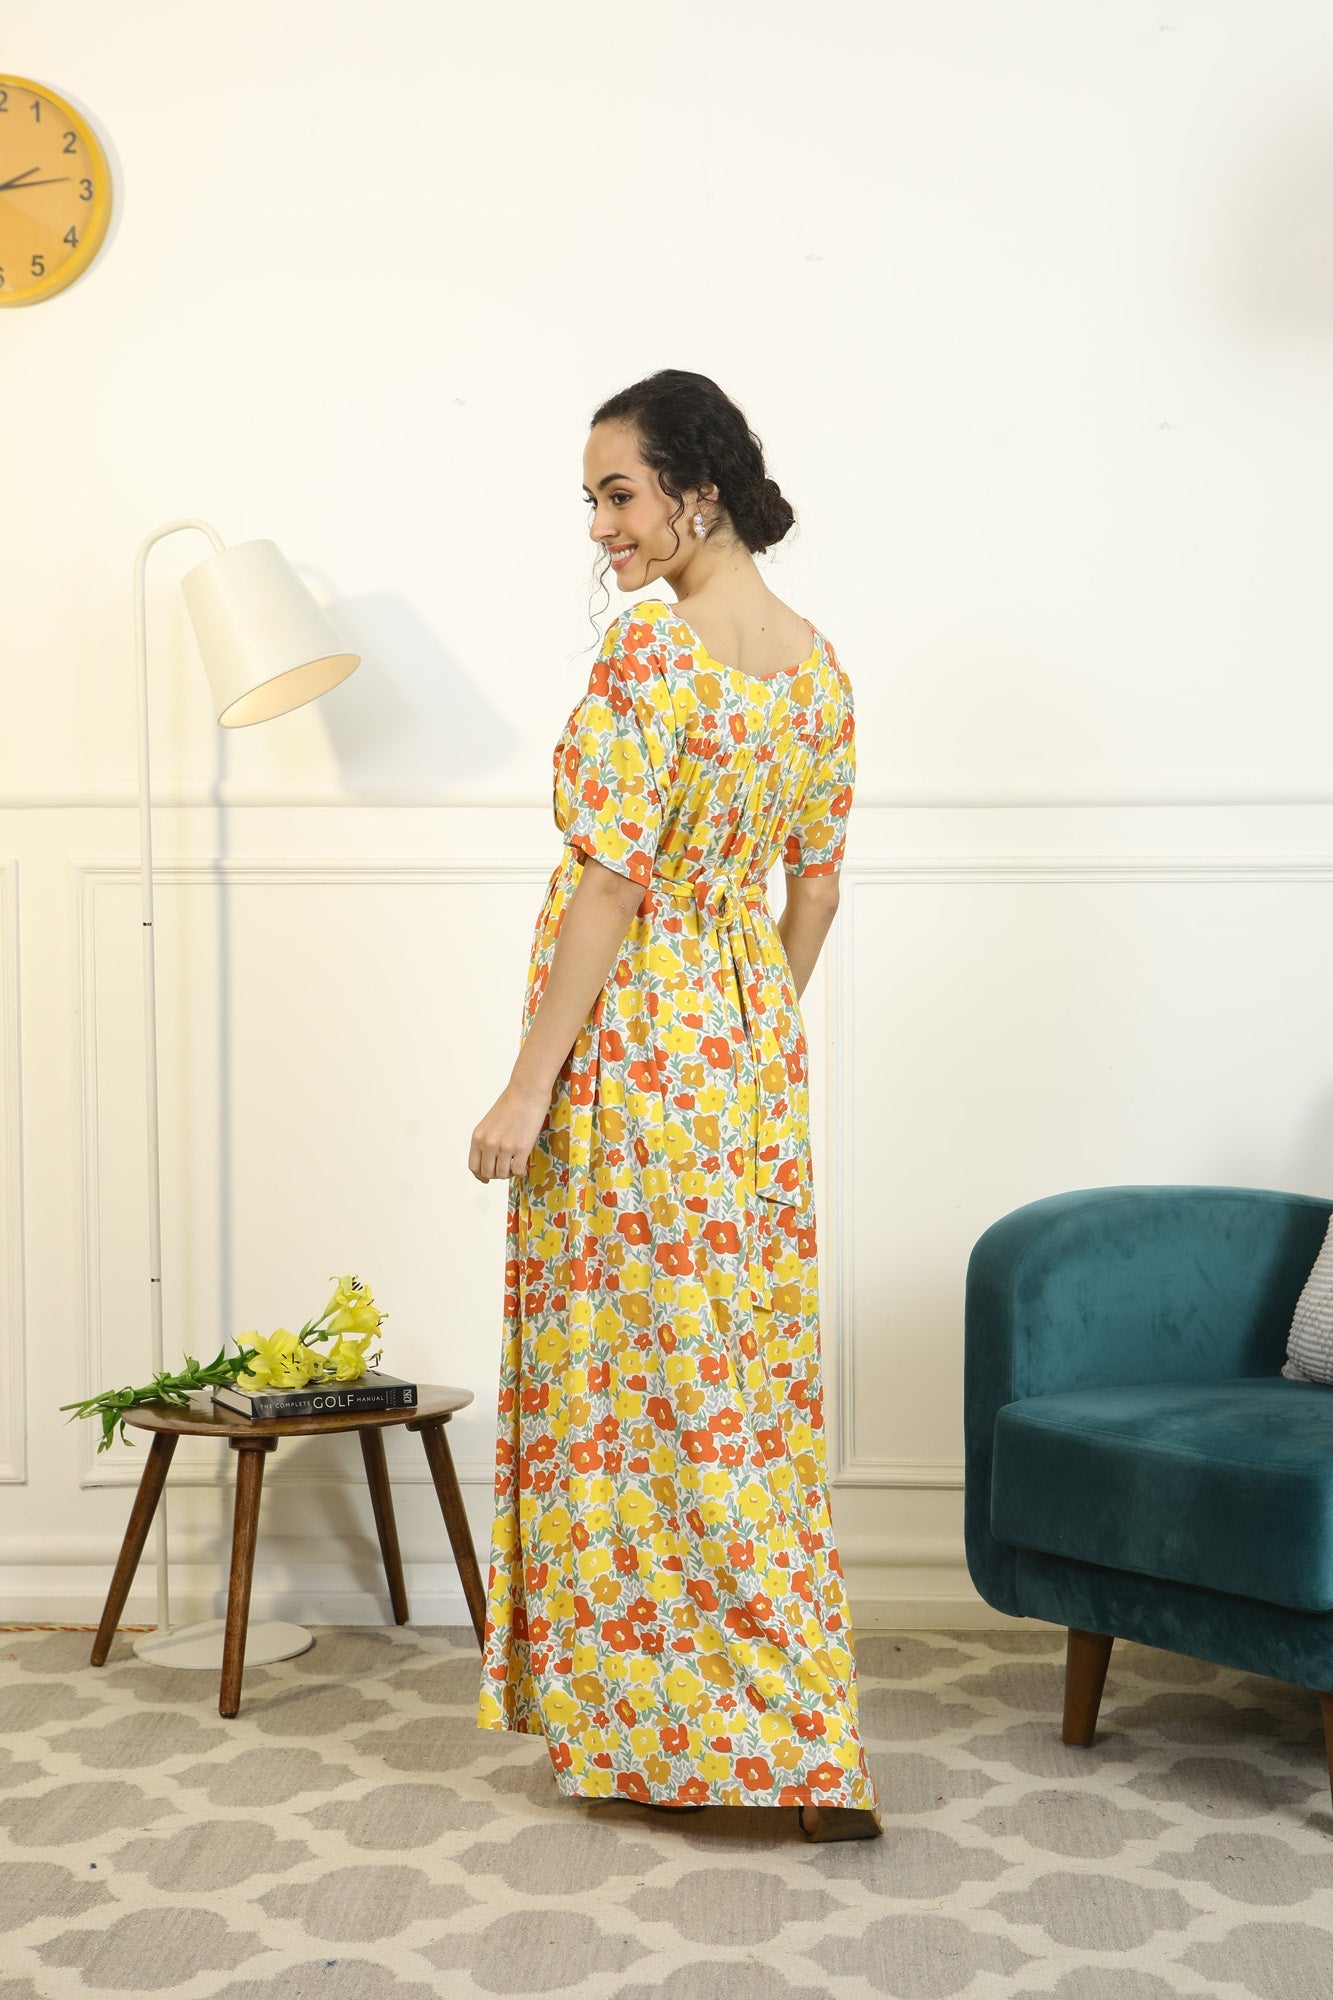 Buy Zivame Maternity Floral Pop Woven Knee Length Nightdress